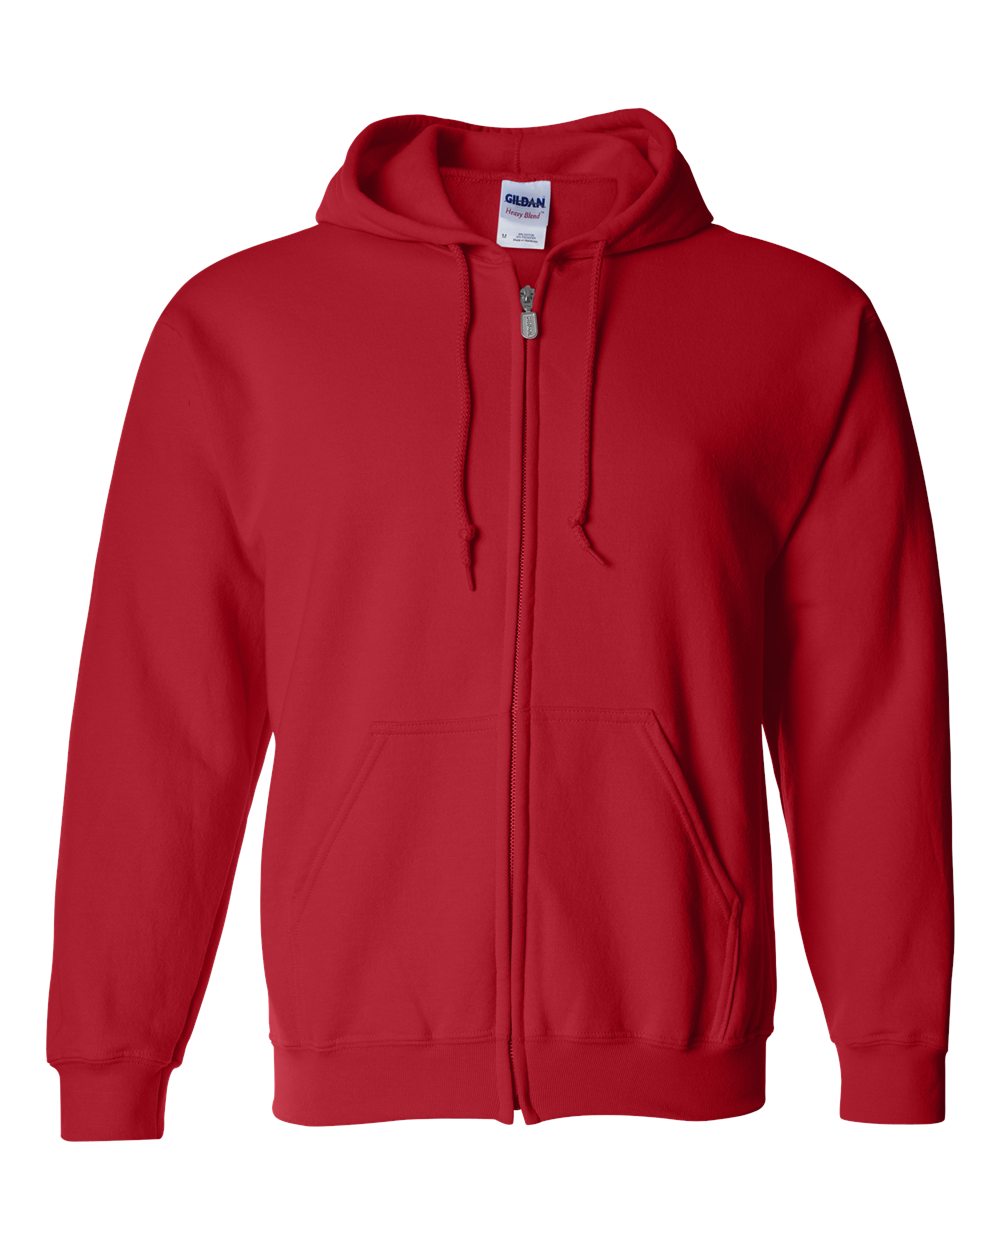 Gildan - Heavy Blend Full-Zip Hooded Sweatshirt - 18600 | eBay